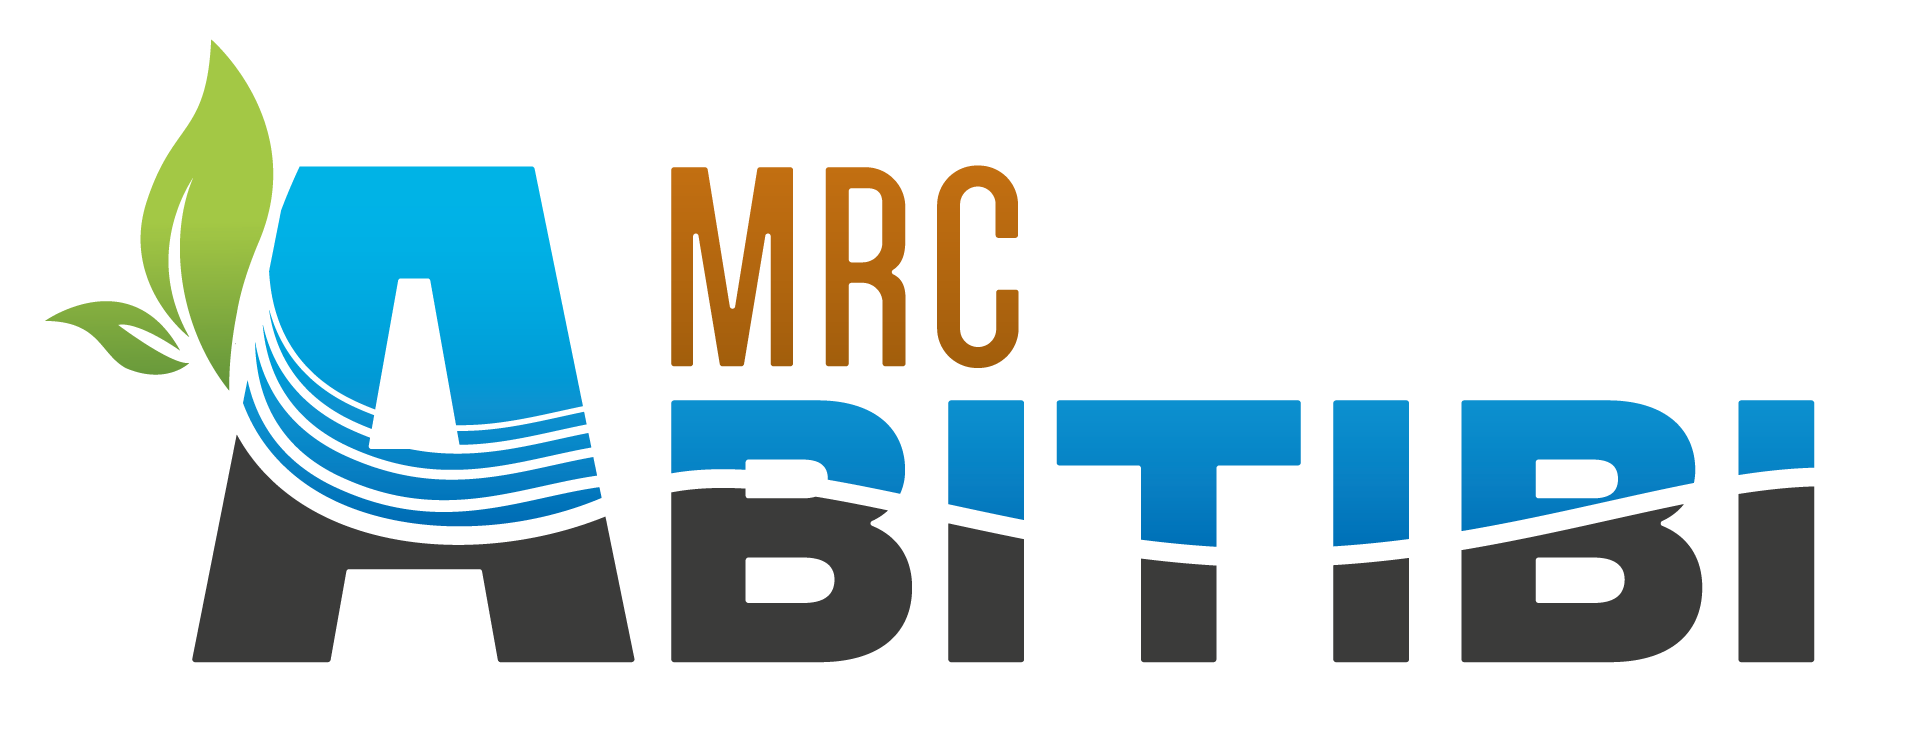 MRC d'Abitibi